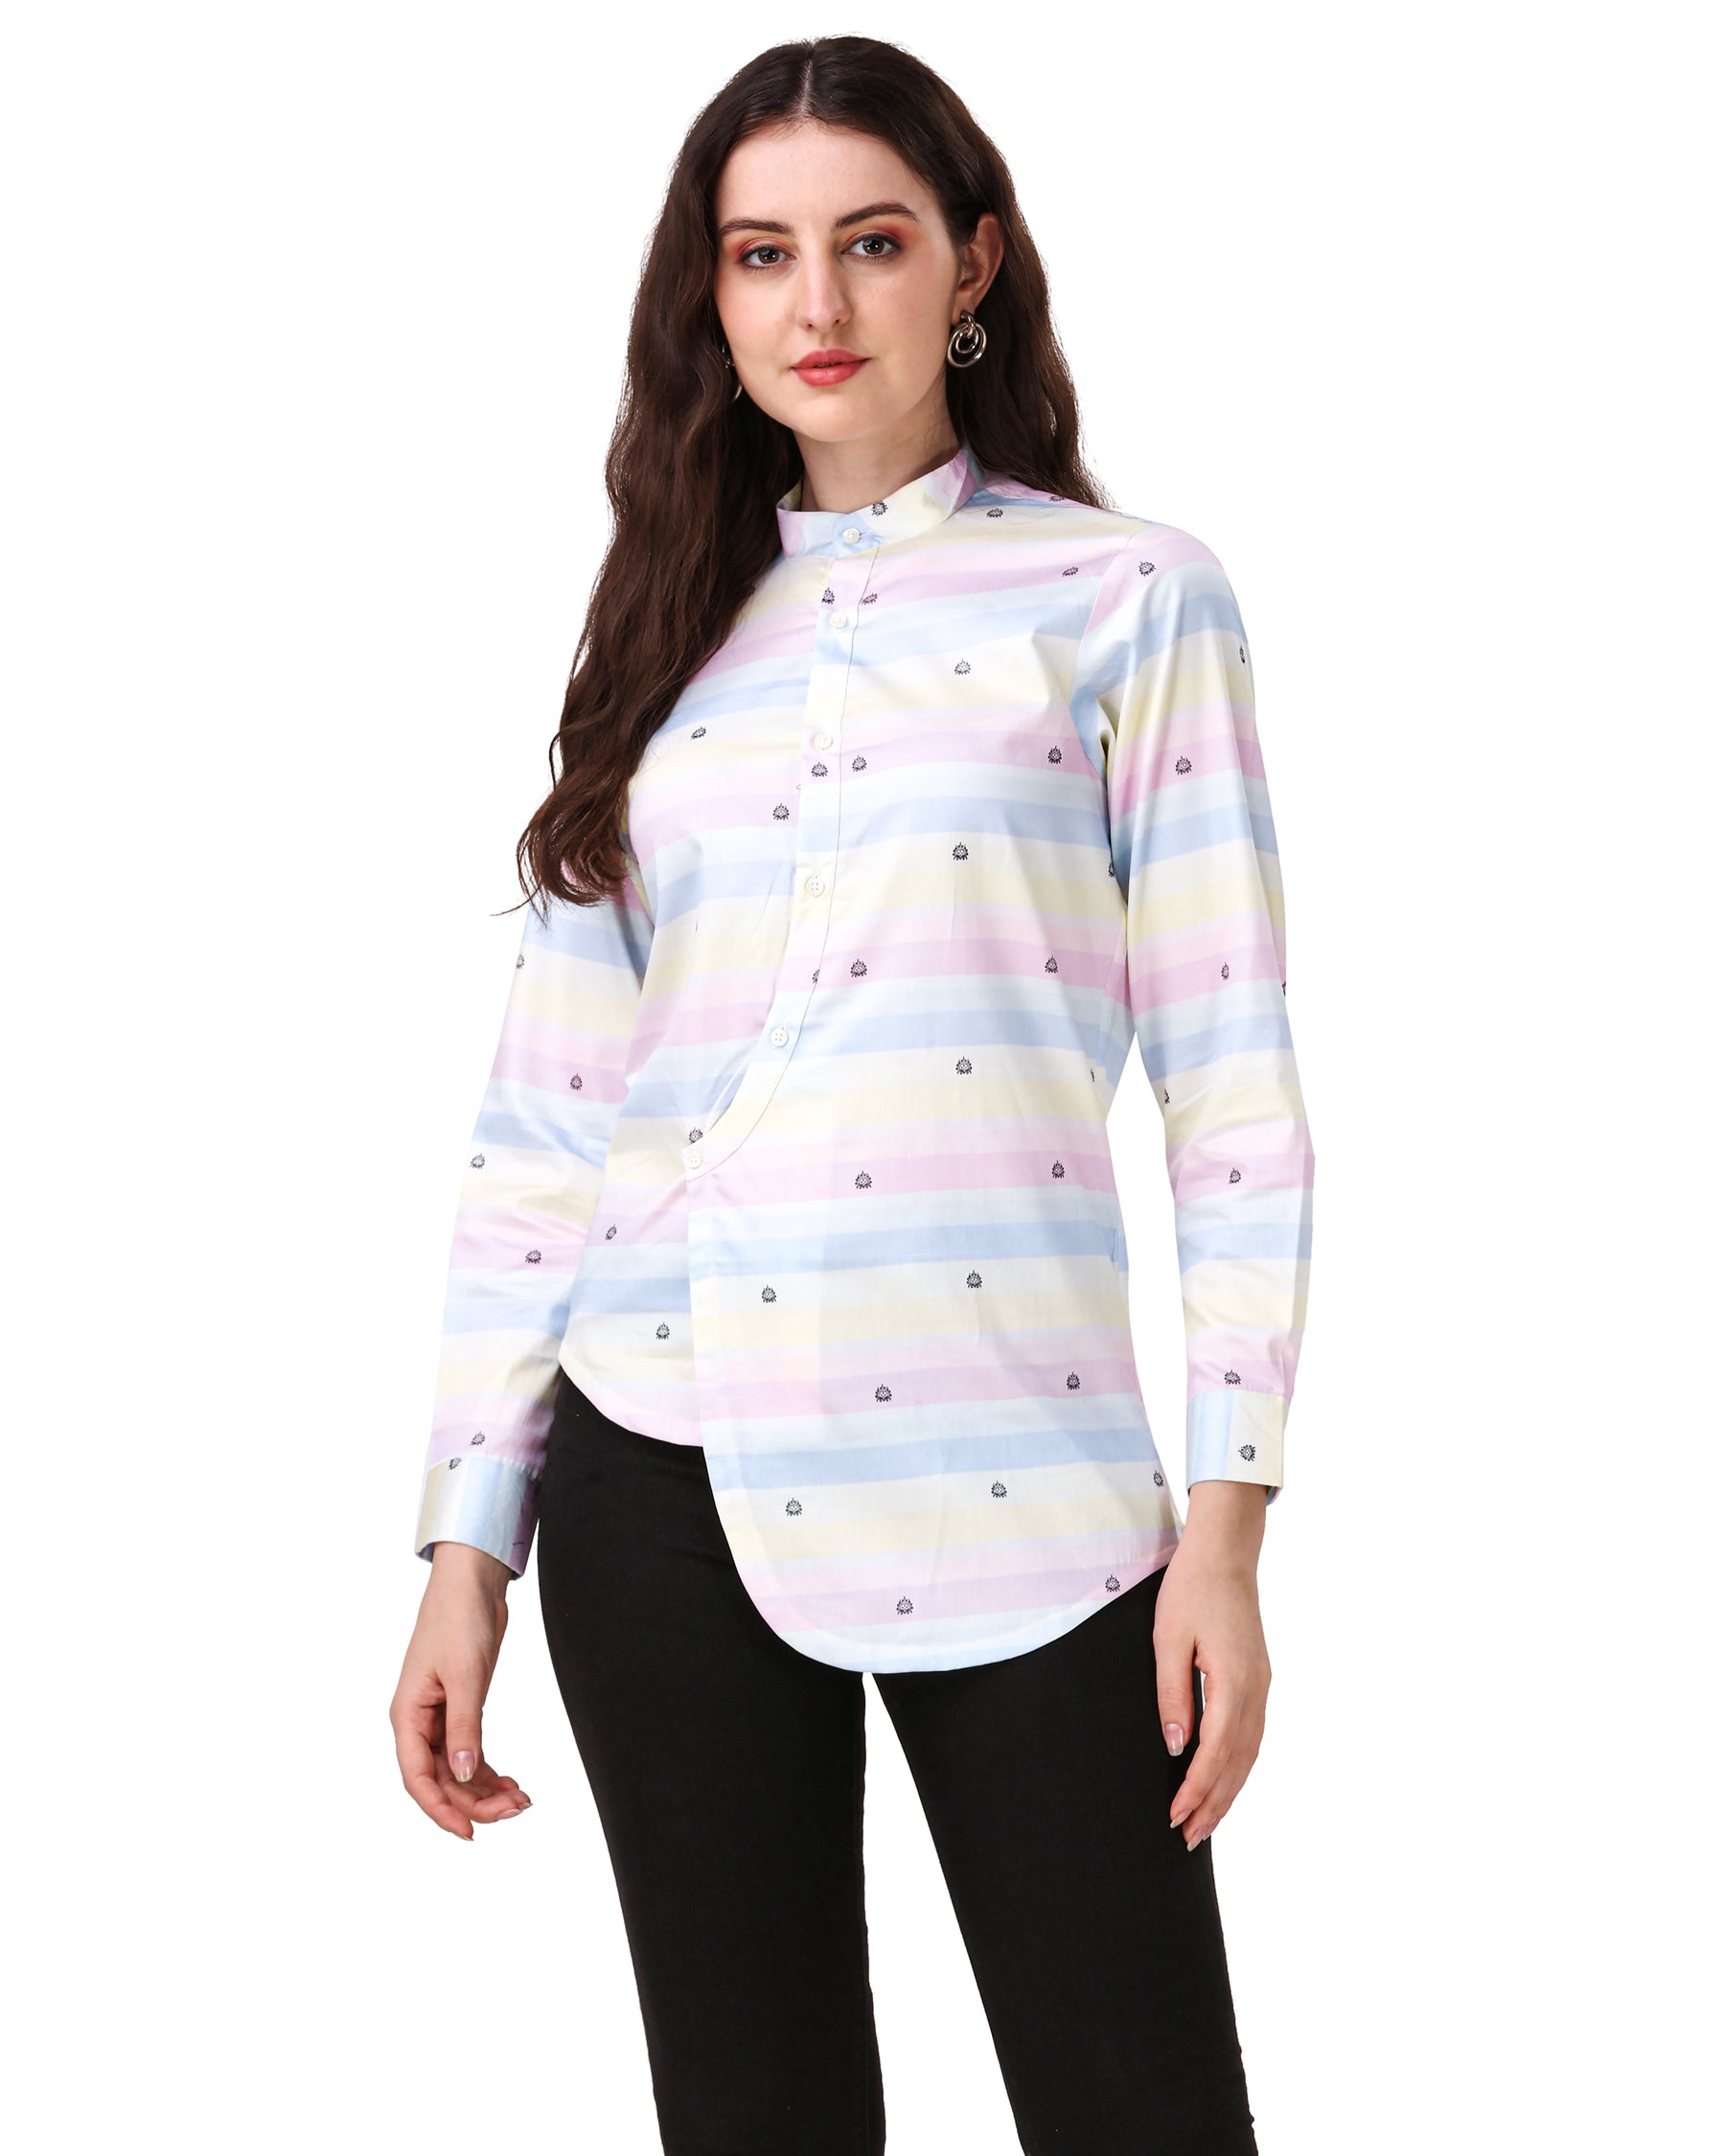 Cherub Pink and Multicolour Printed Super Soft Premium Cotton Women’s Shirt